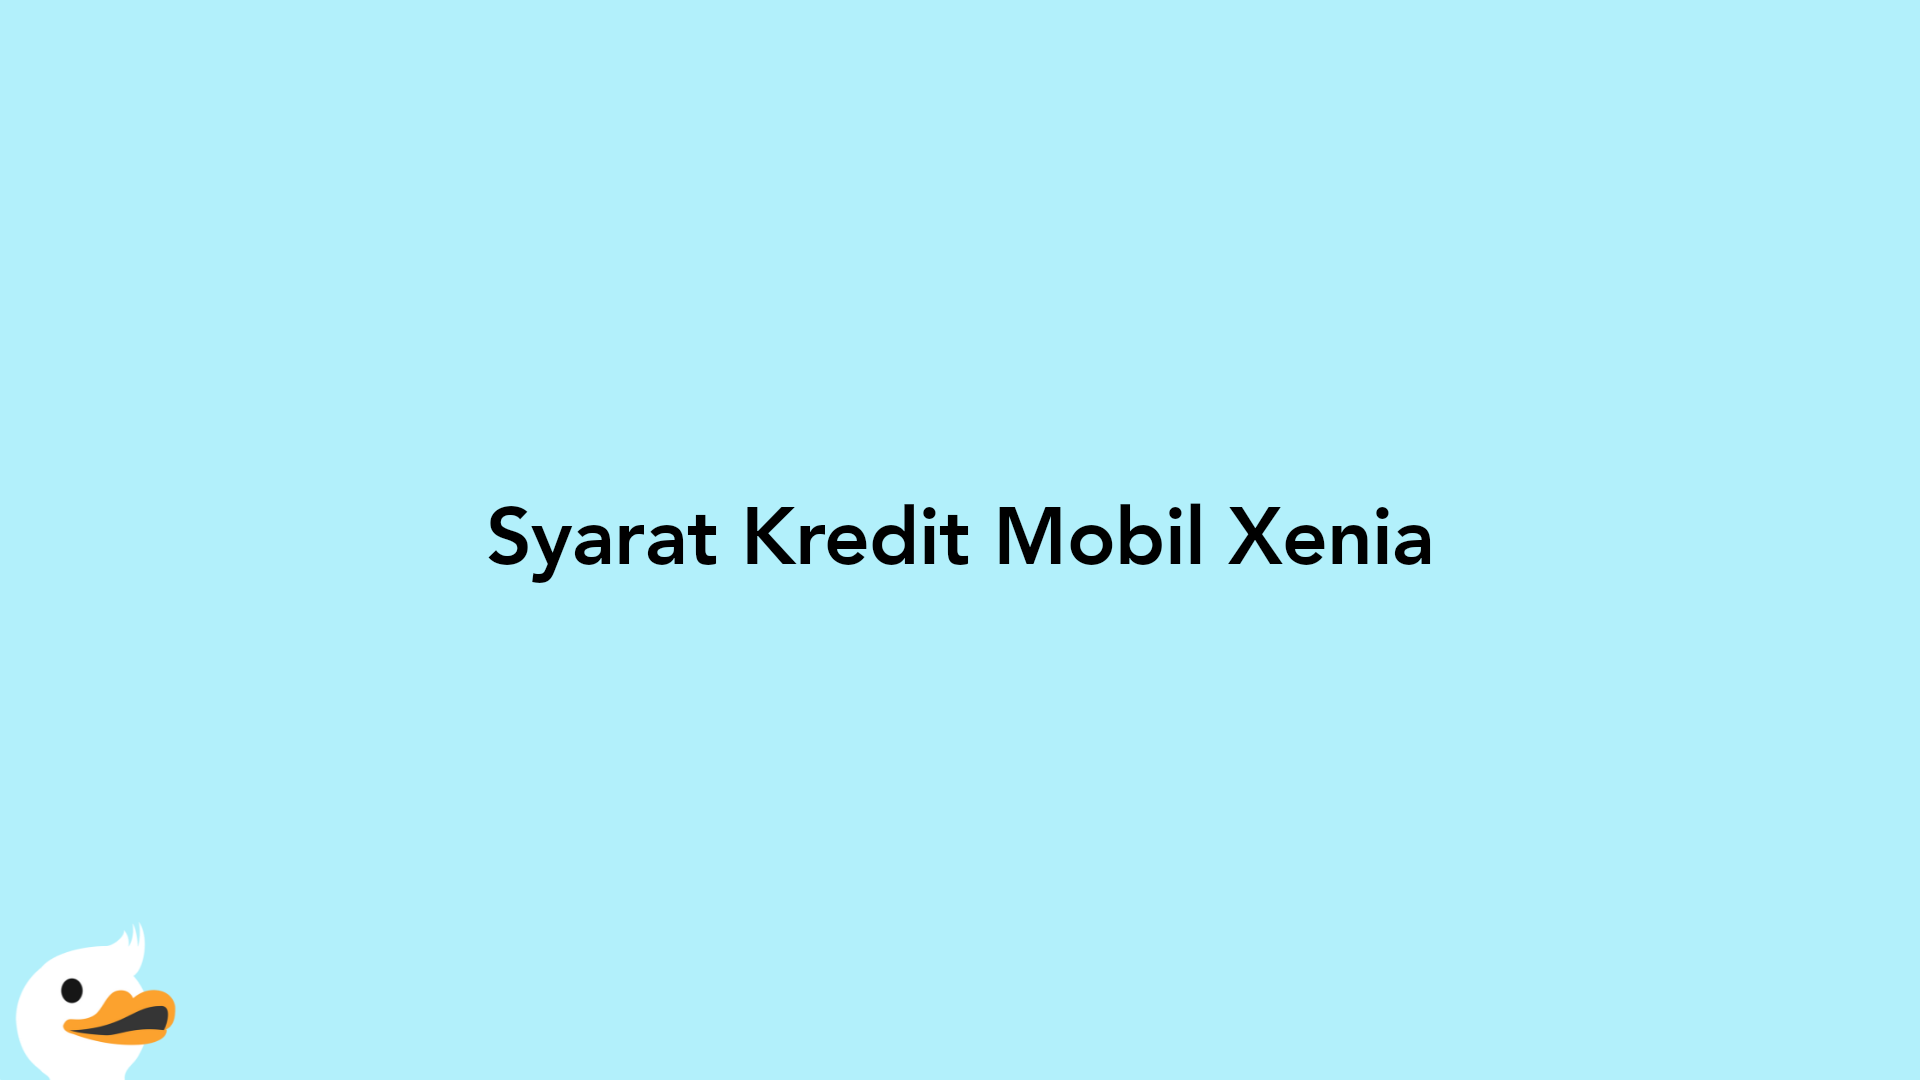 Syarat Kredit Mobil Xenia